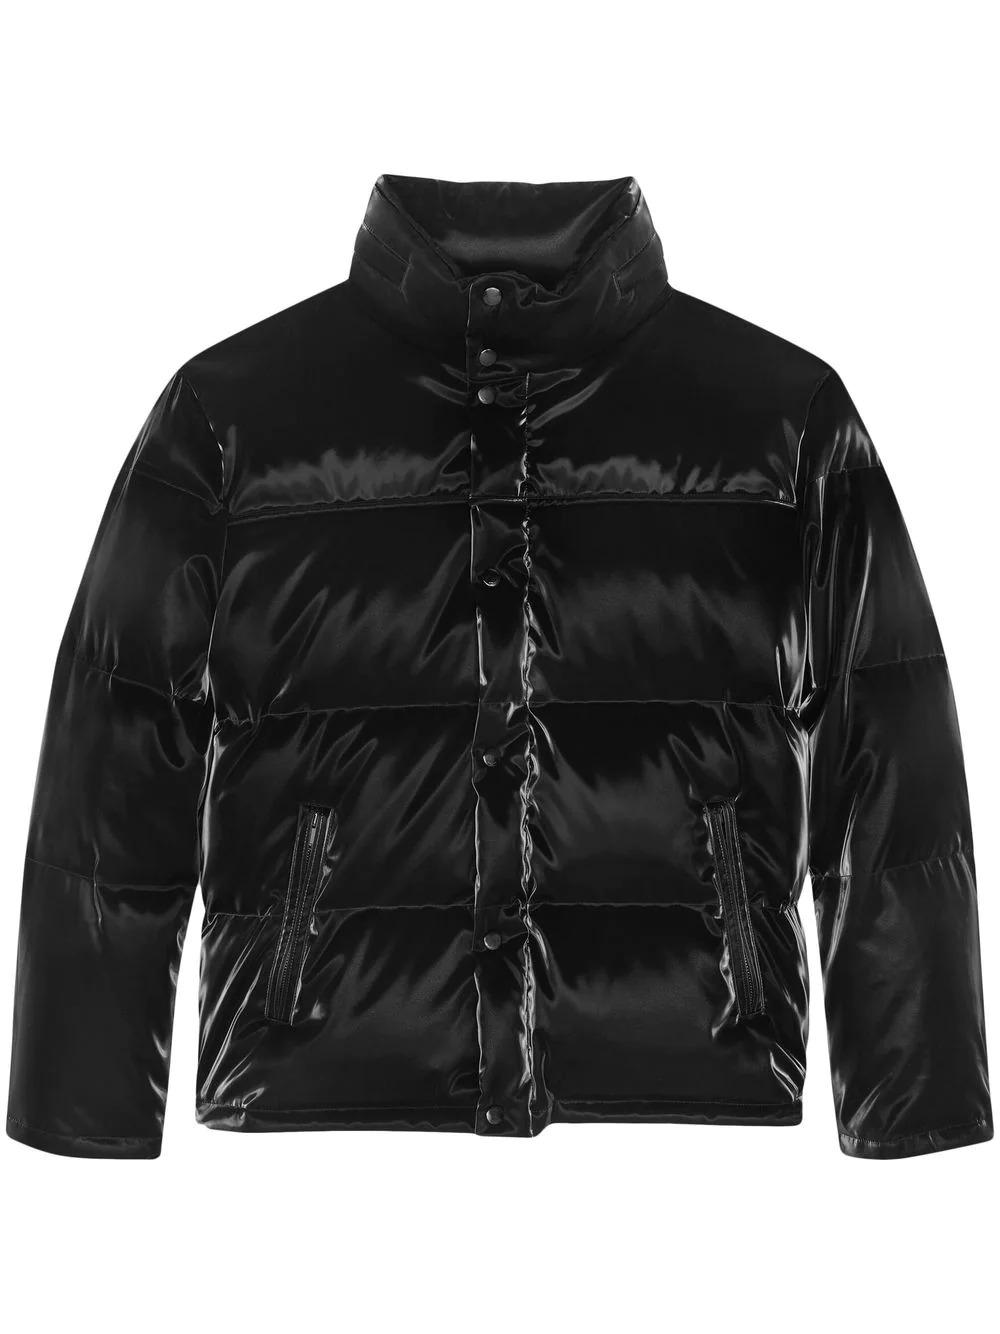 Saint Laurent Puffer Jacket in Black for Men | Lyst